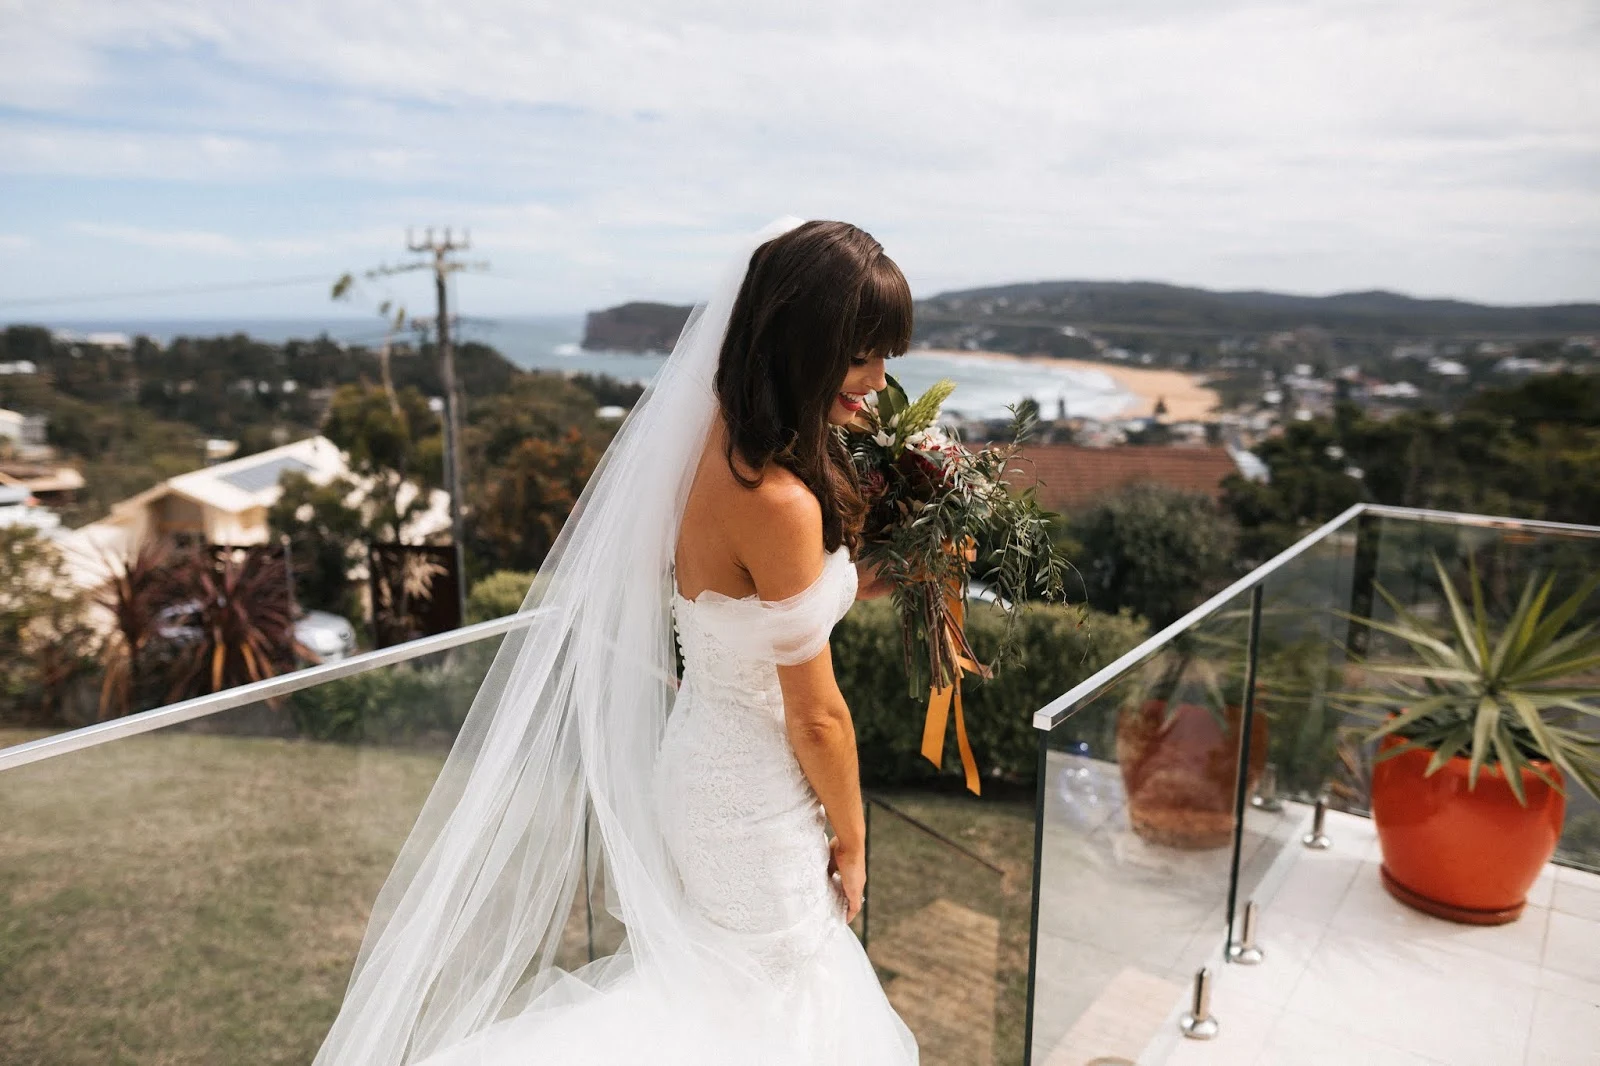 TO THE AISLE AUSTRALIA SYDNEY WEDDING VENUE